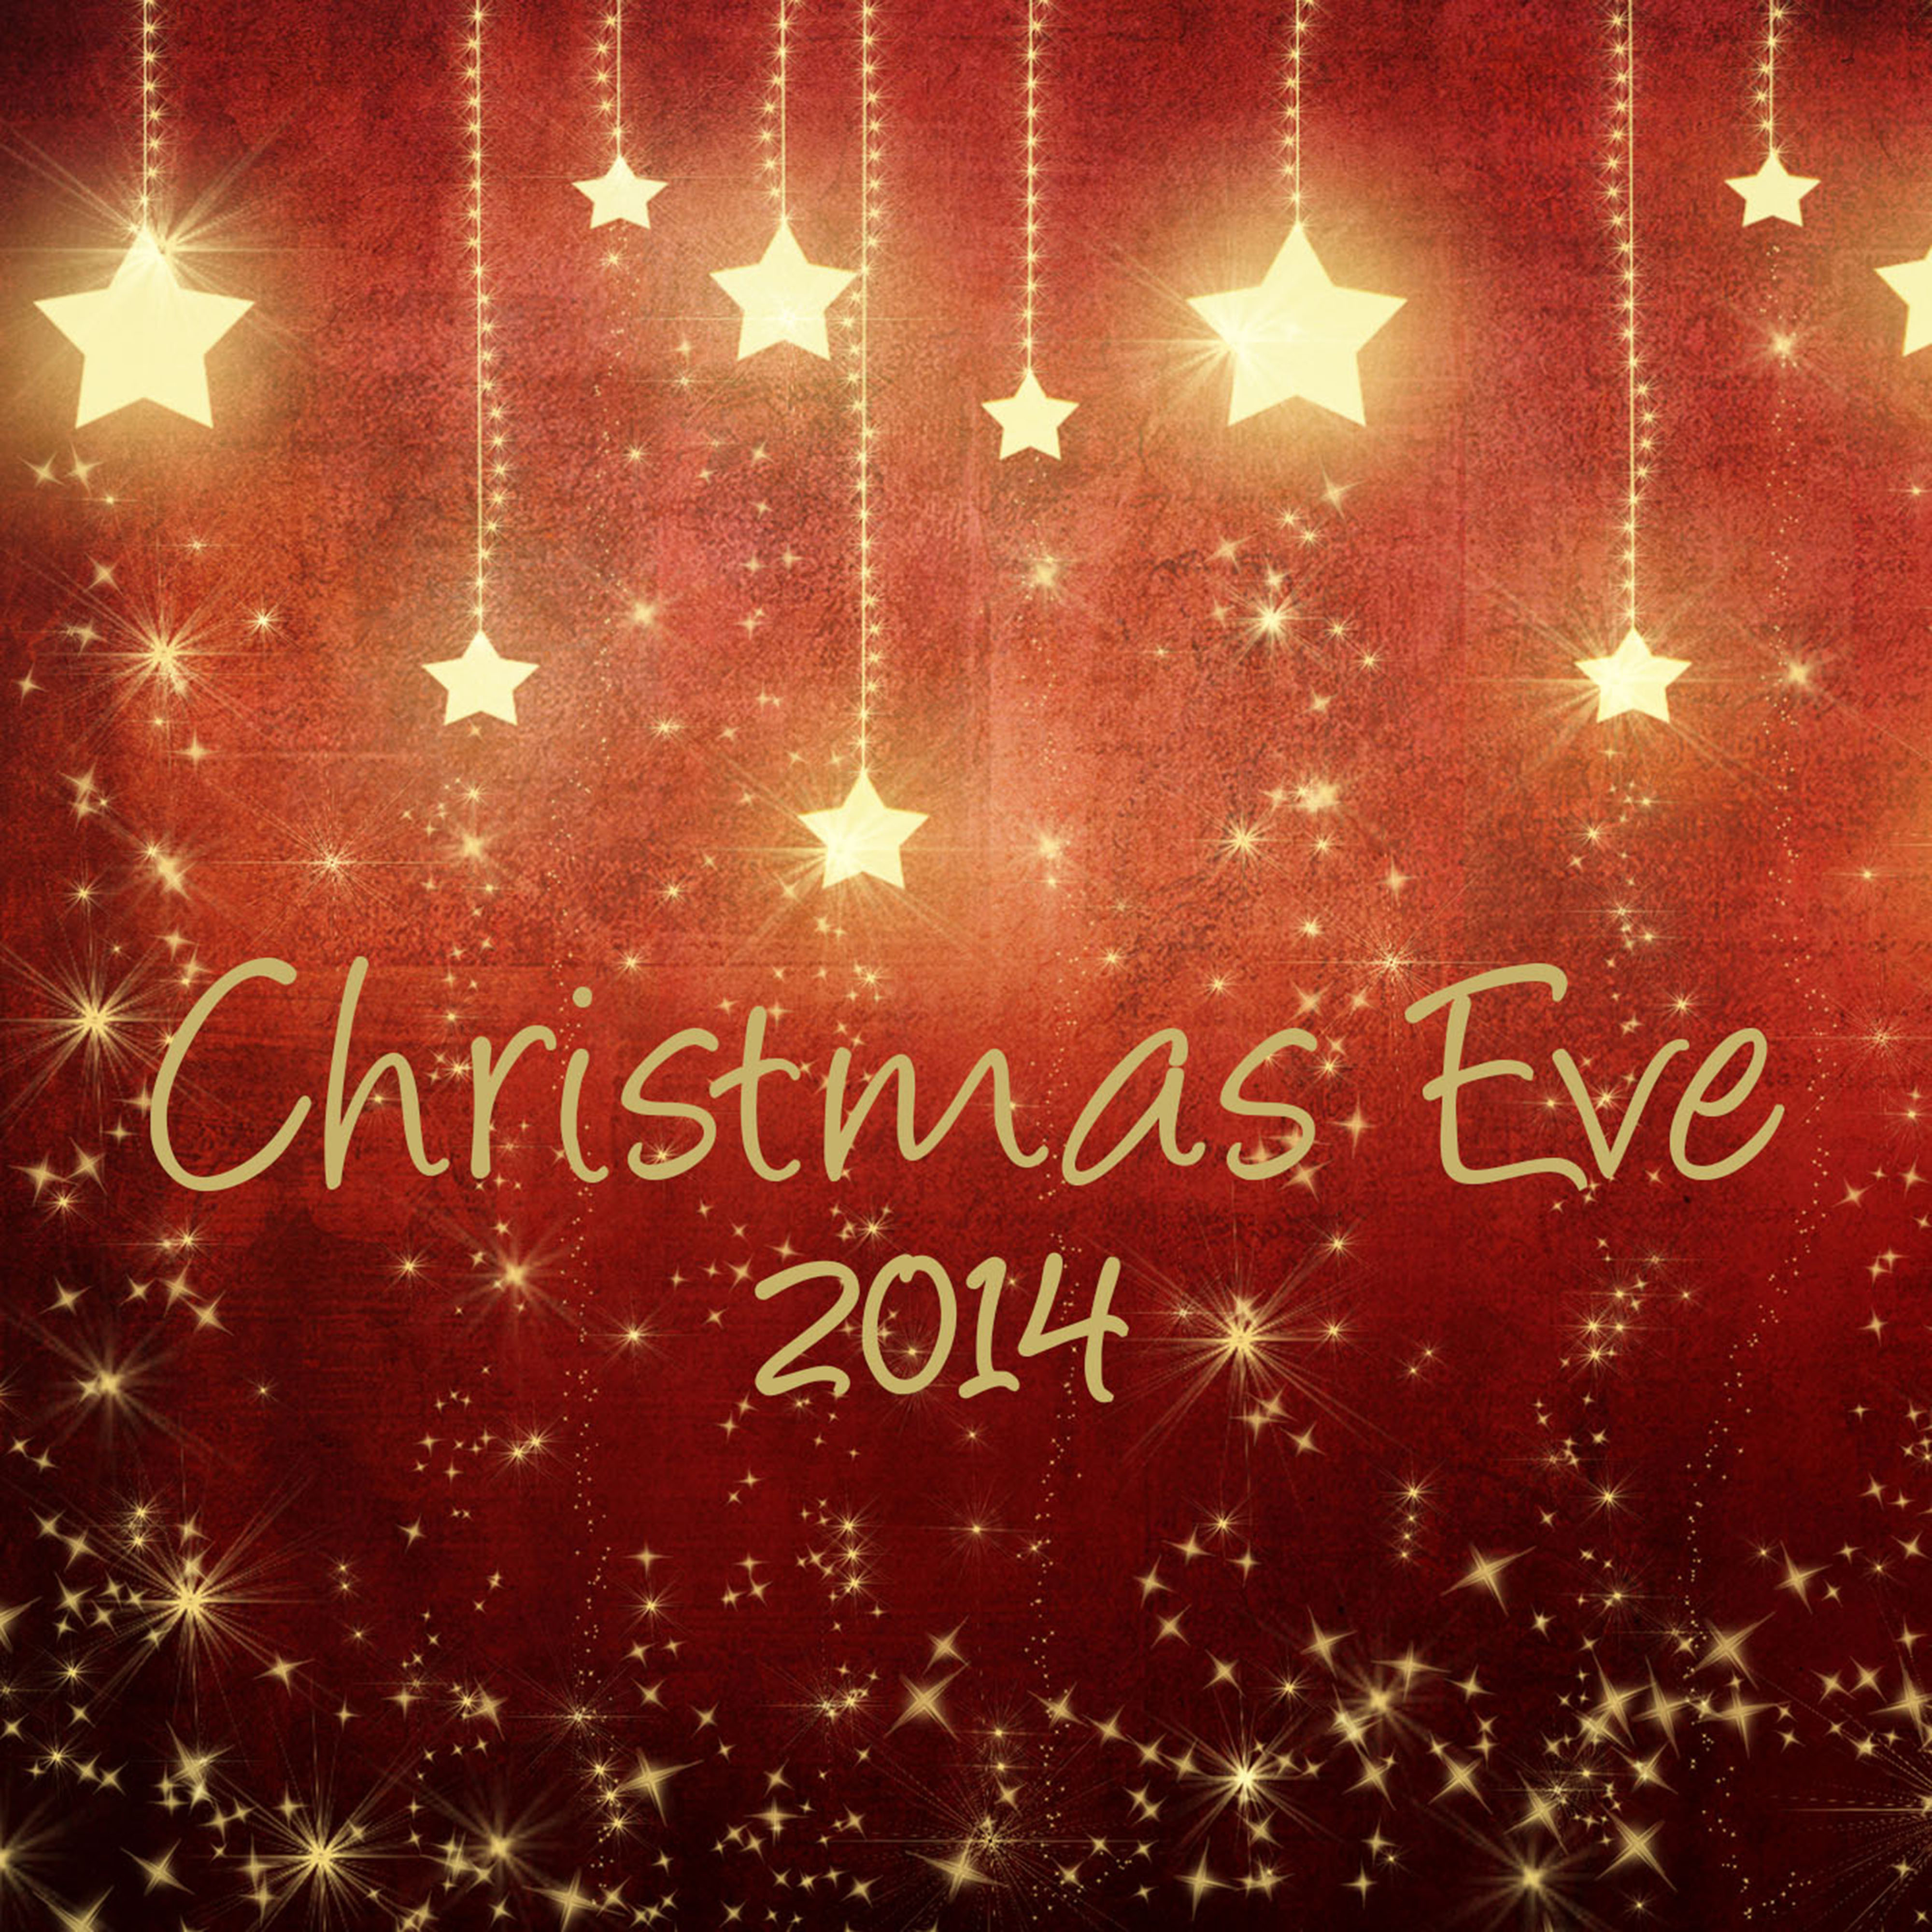 Christmas Eve 2014 – Classical Traditional Instrumental Christmas Music & Vocals for Christmas, Family Reunion and Xmas Eve